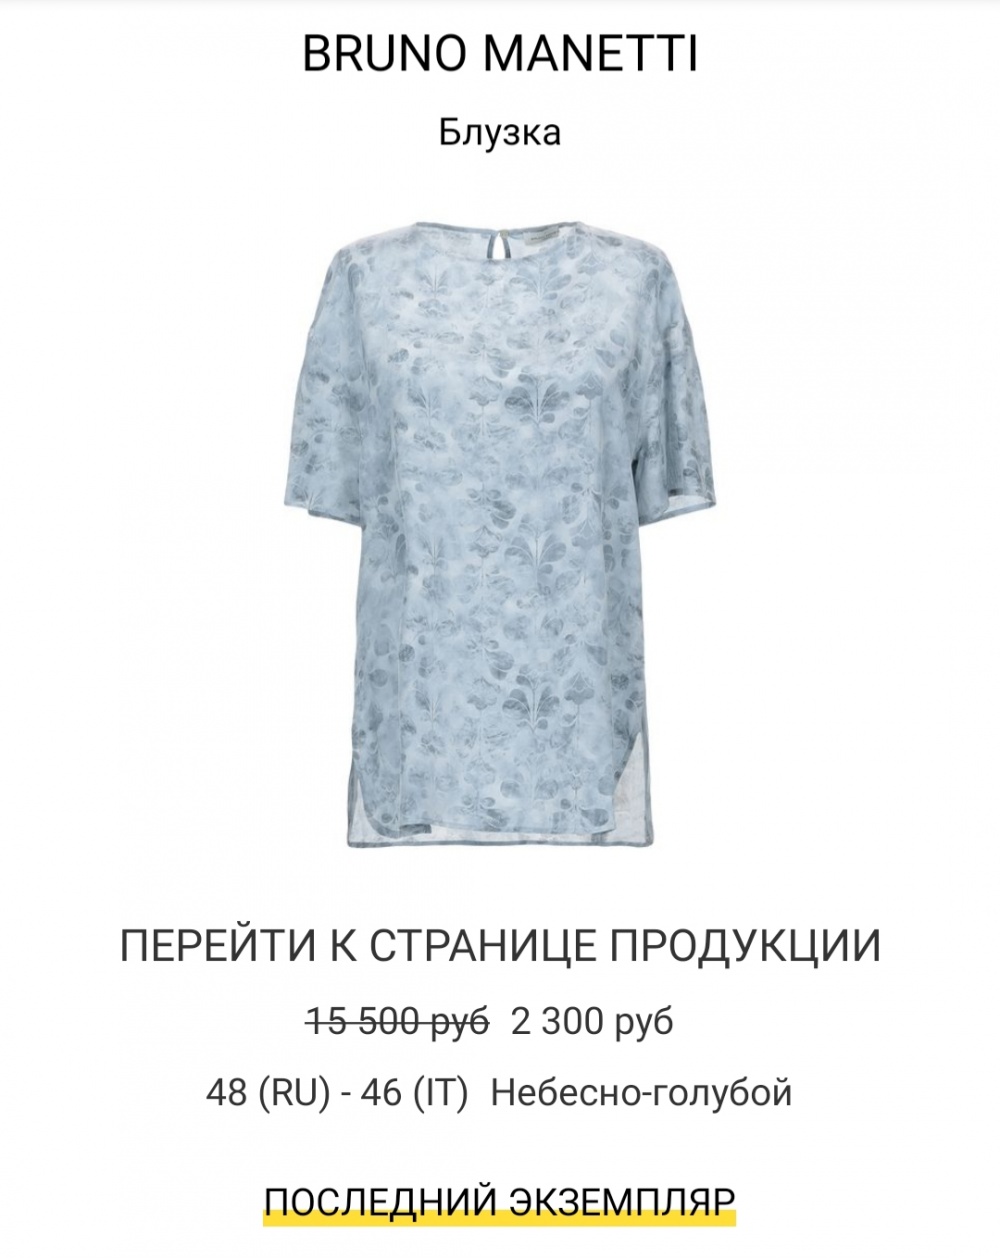 Шёлковая блузка BRUNO MANETTI  р.46IT